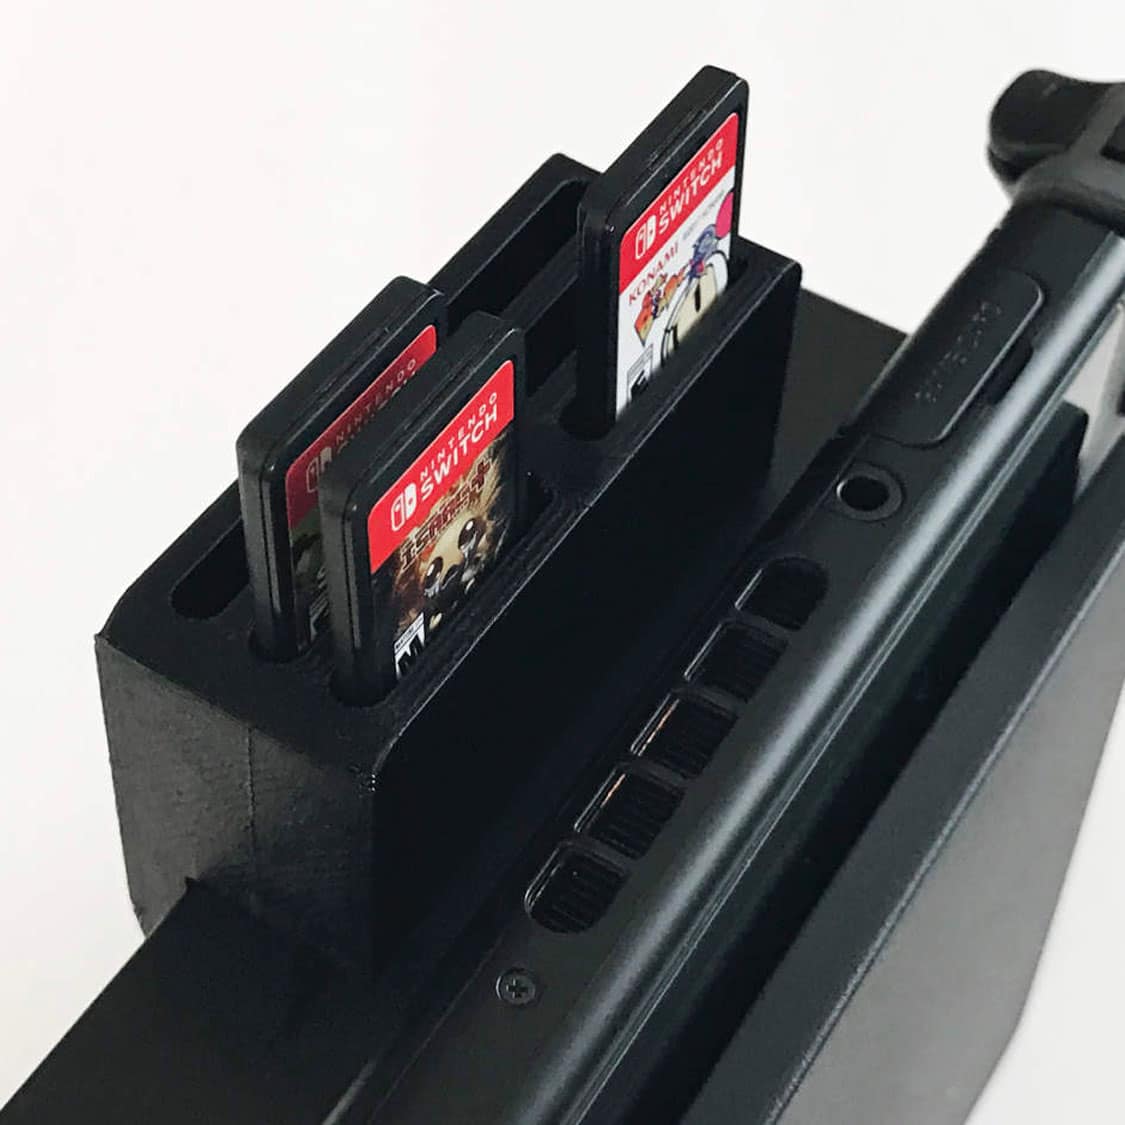 Nintendo Switch Cartridge Holder - Shut 